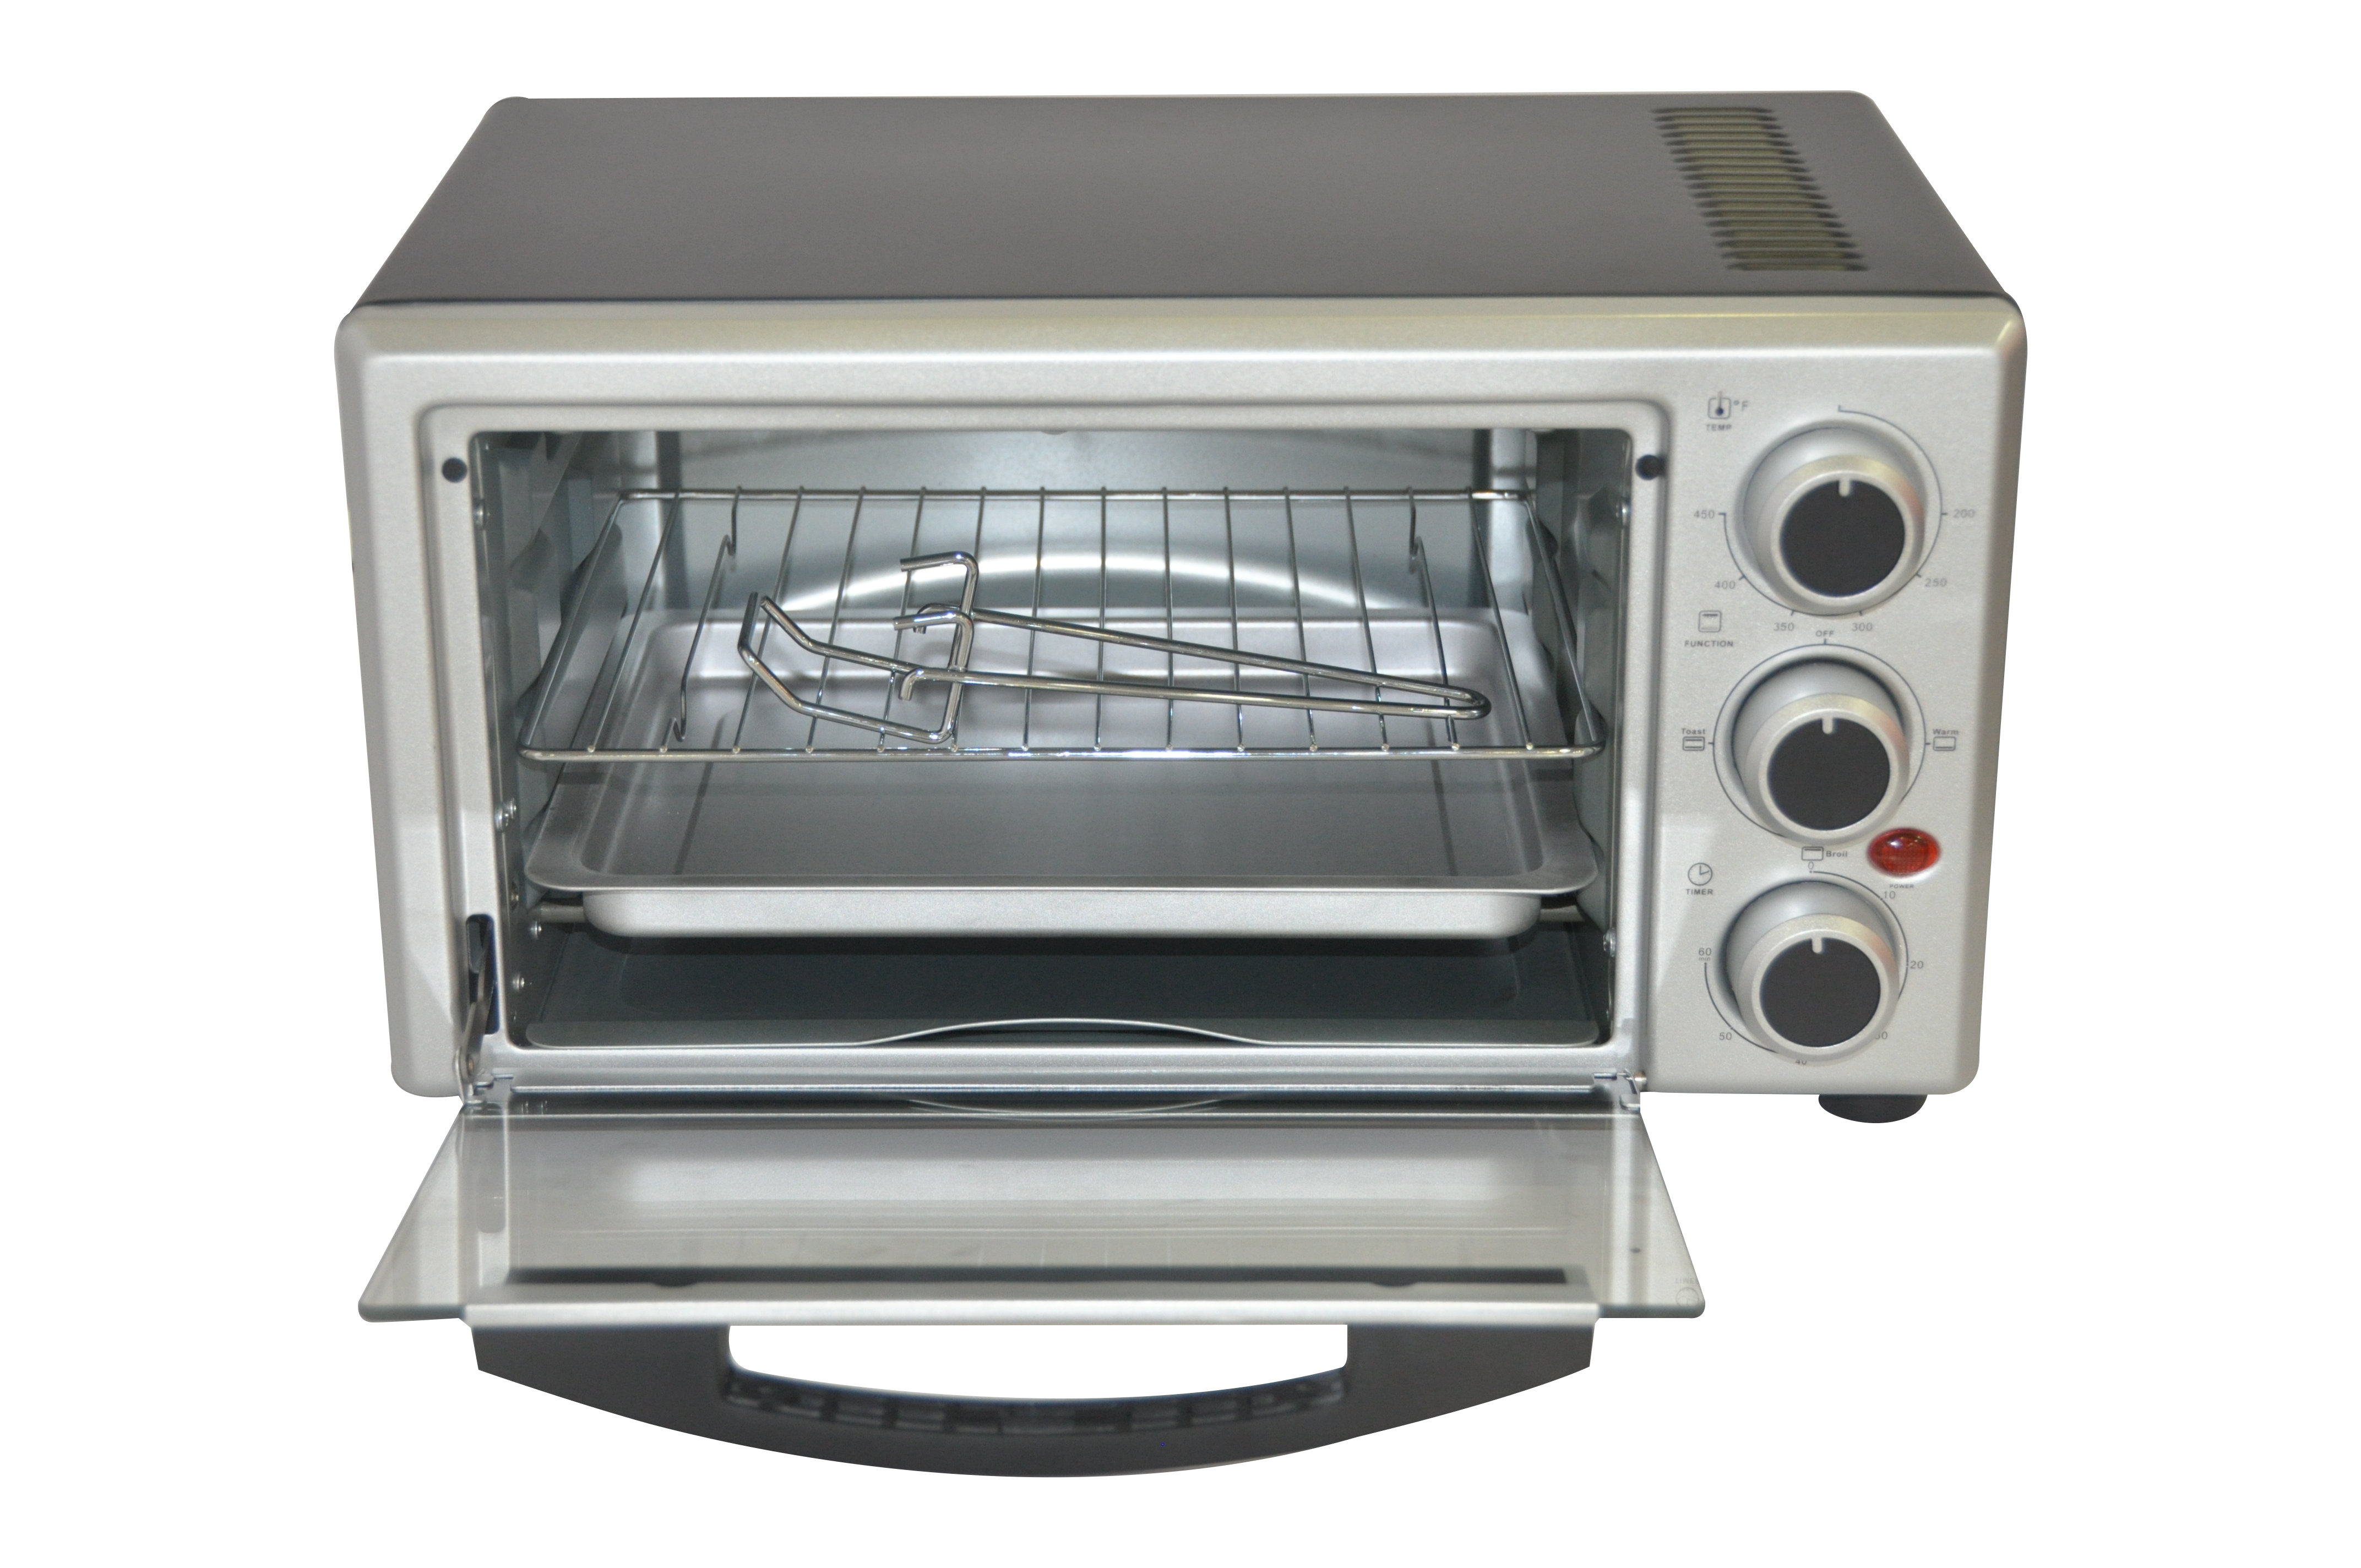 BLACK+DECKER 4-Slice Toaster Oven $20.38 (Lowest Price)